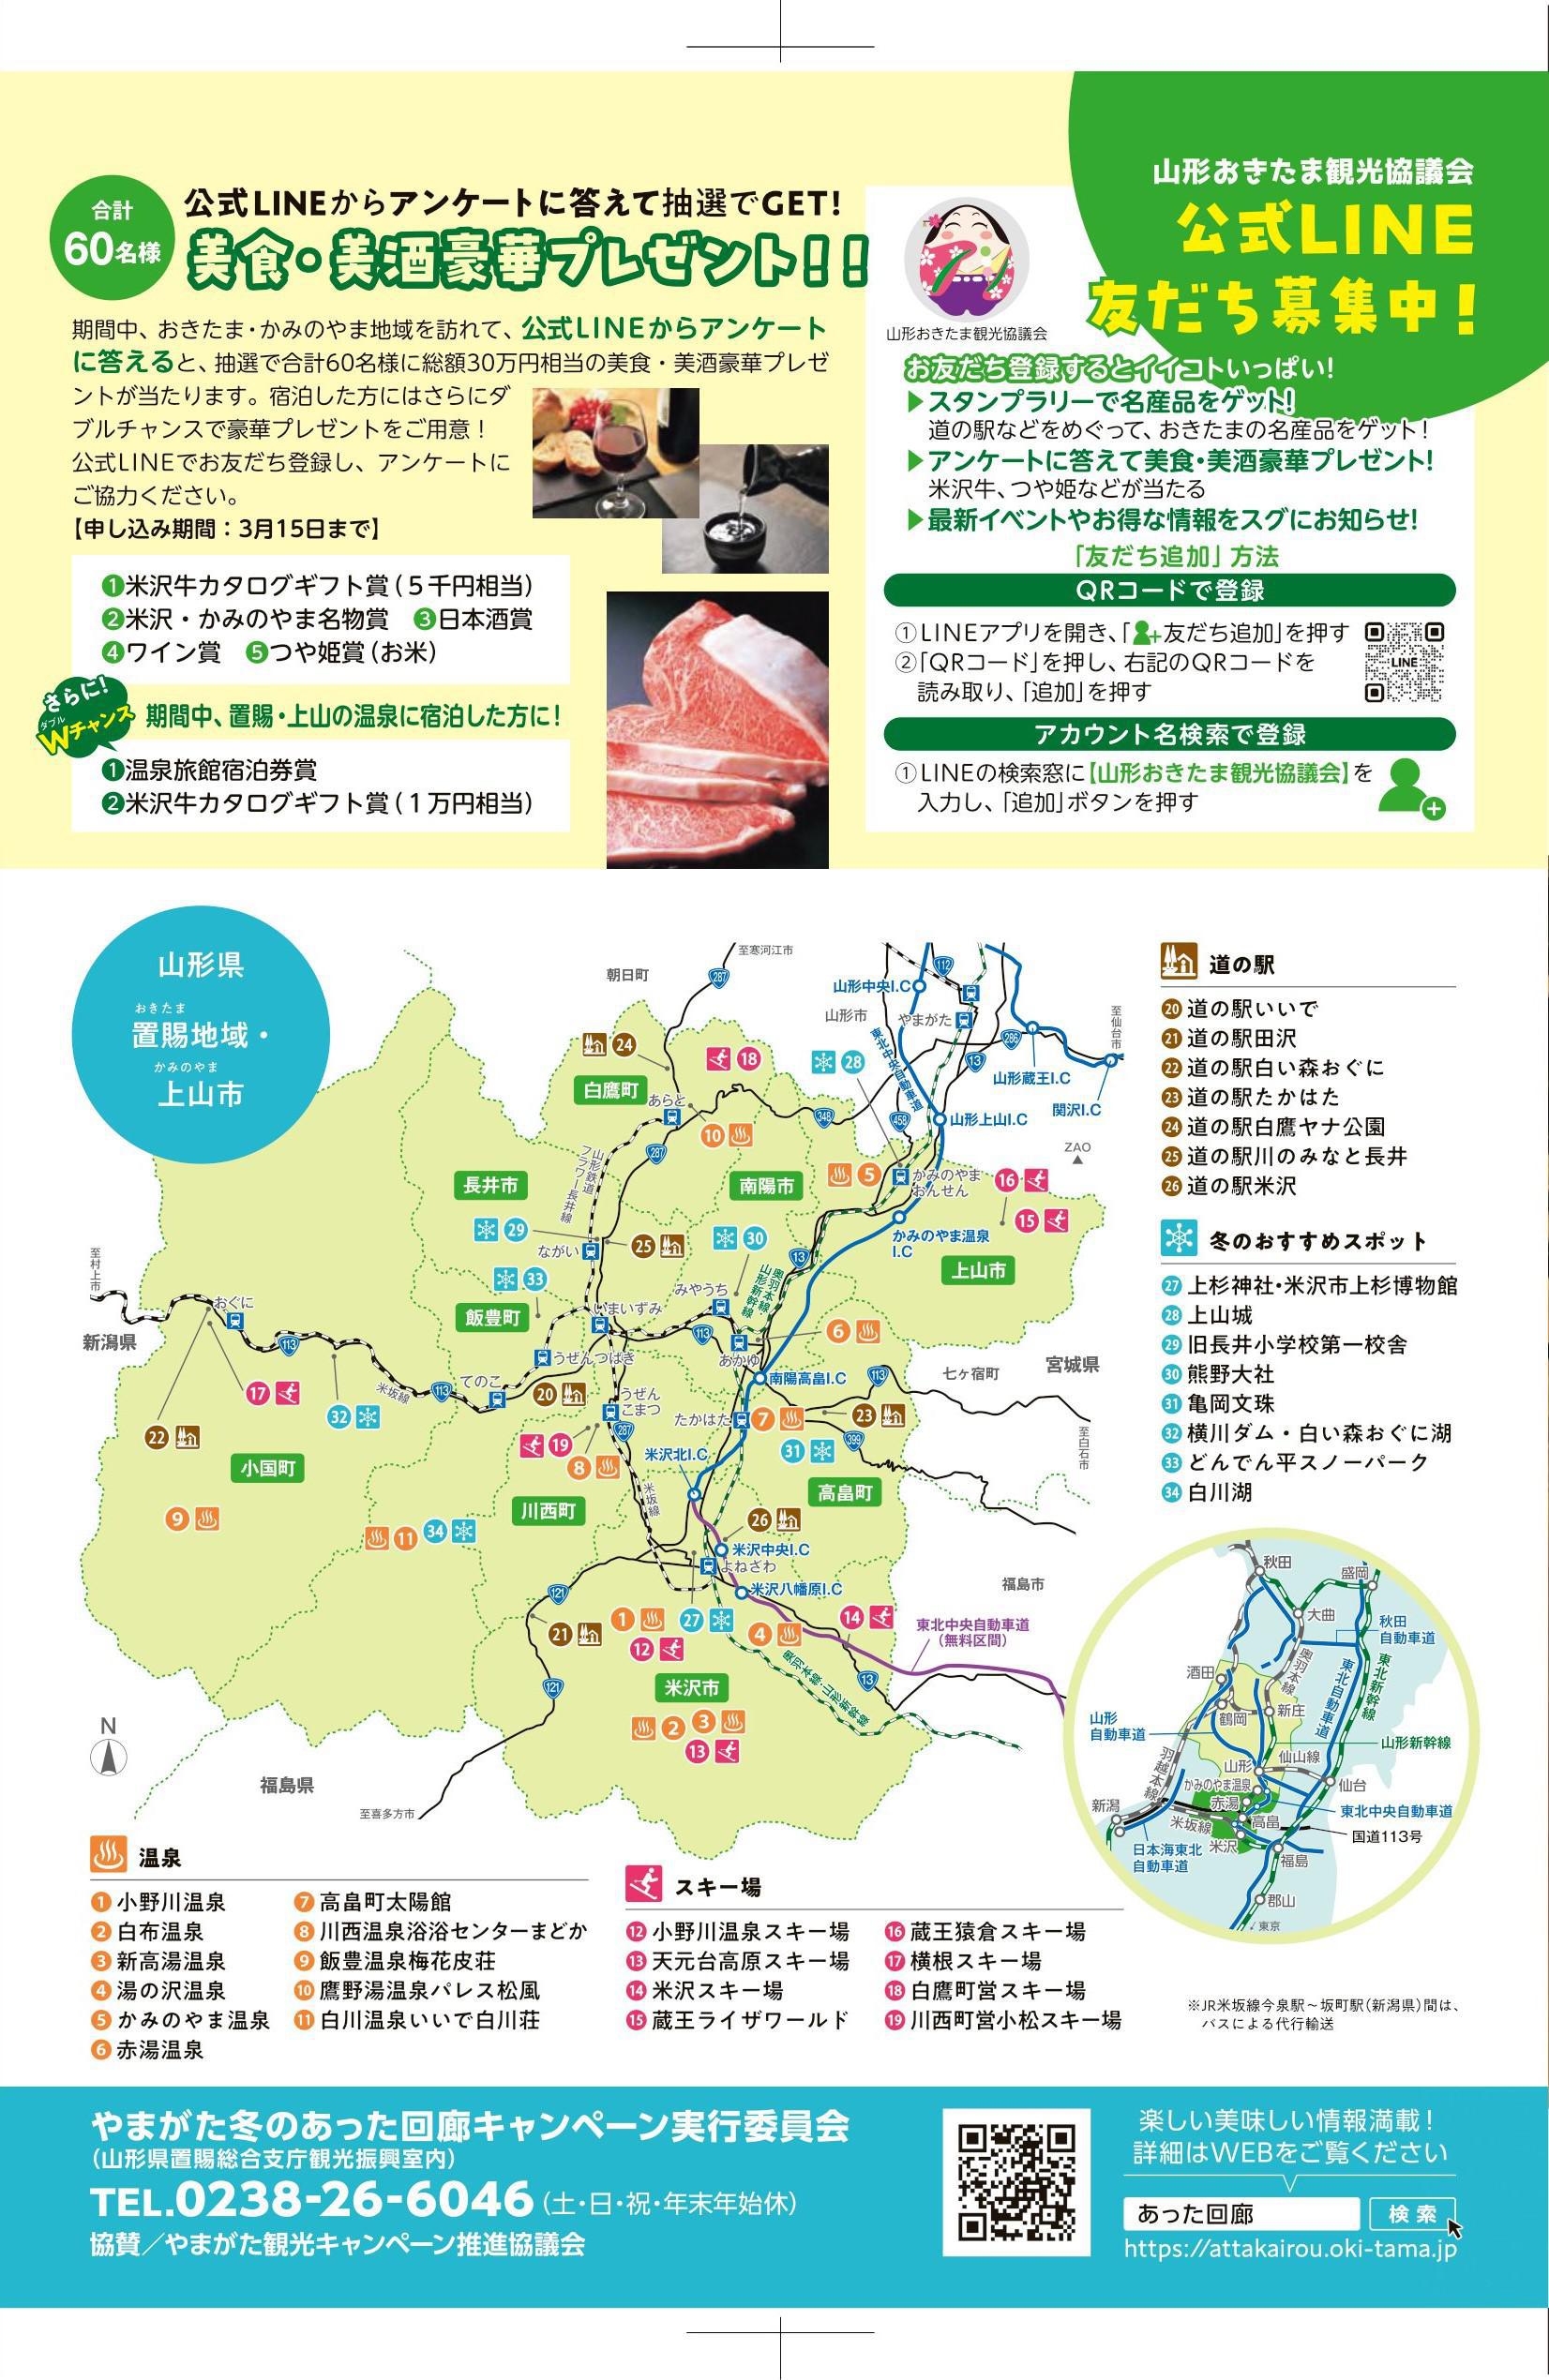 Yamagata Warm & Cozy Winter Tour Campaign (1 Dec. 2023 - 31 Mar. 2024) (简体中文・한국어)